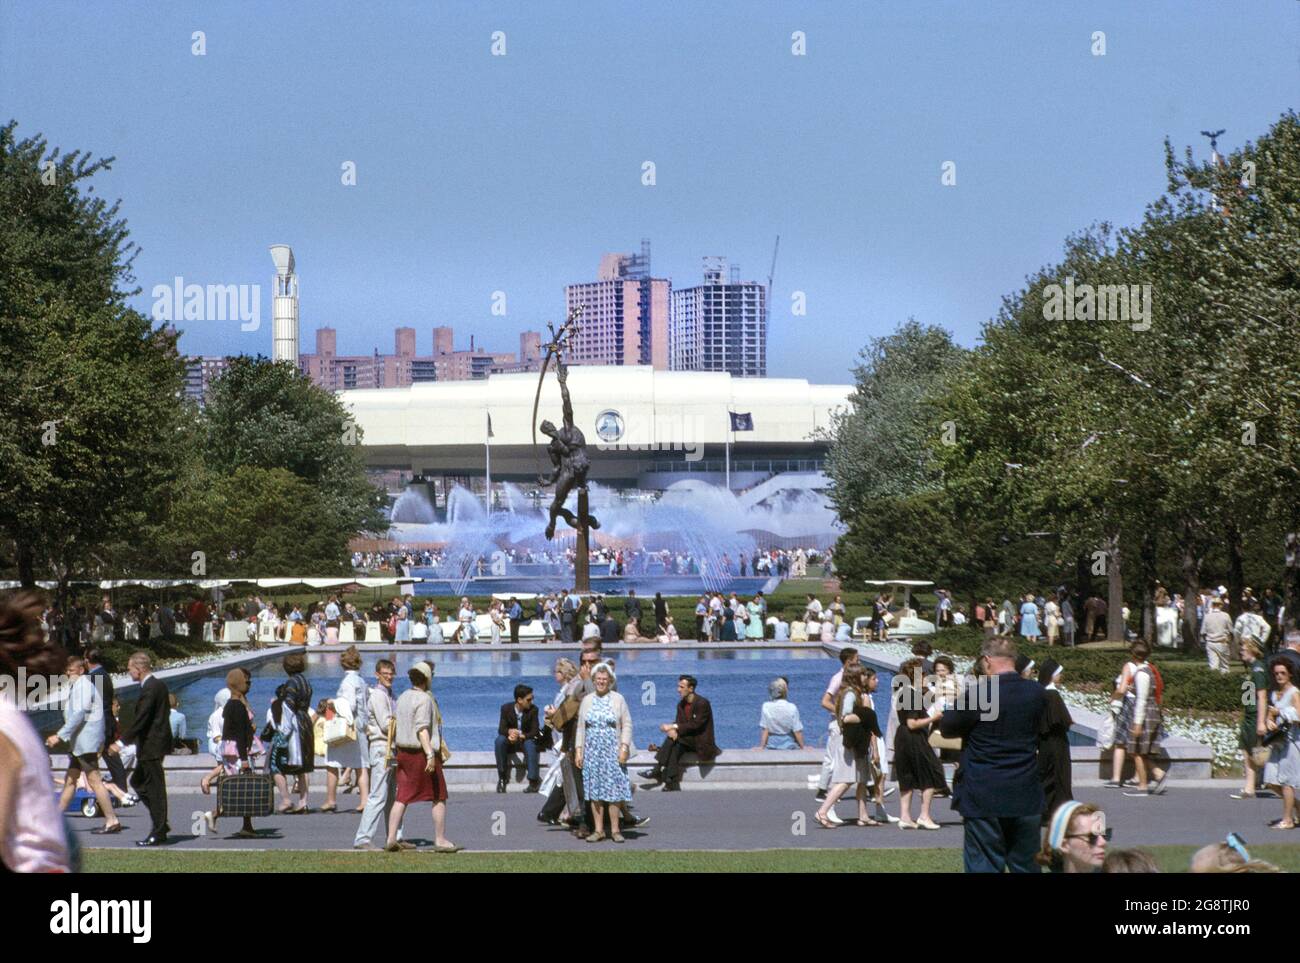 Crowd Scene, World's Fair, Flushing Meadows-Corona Park, Queens, New York, USA, Bernard Gotfryd, 1964 Stock Photo